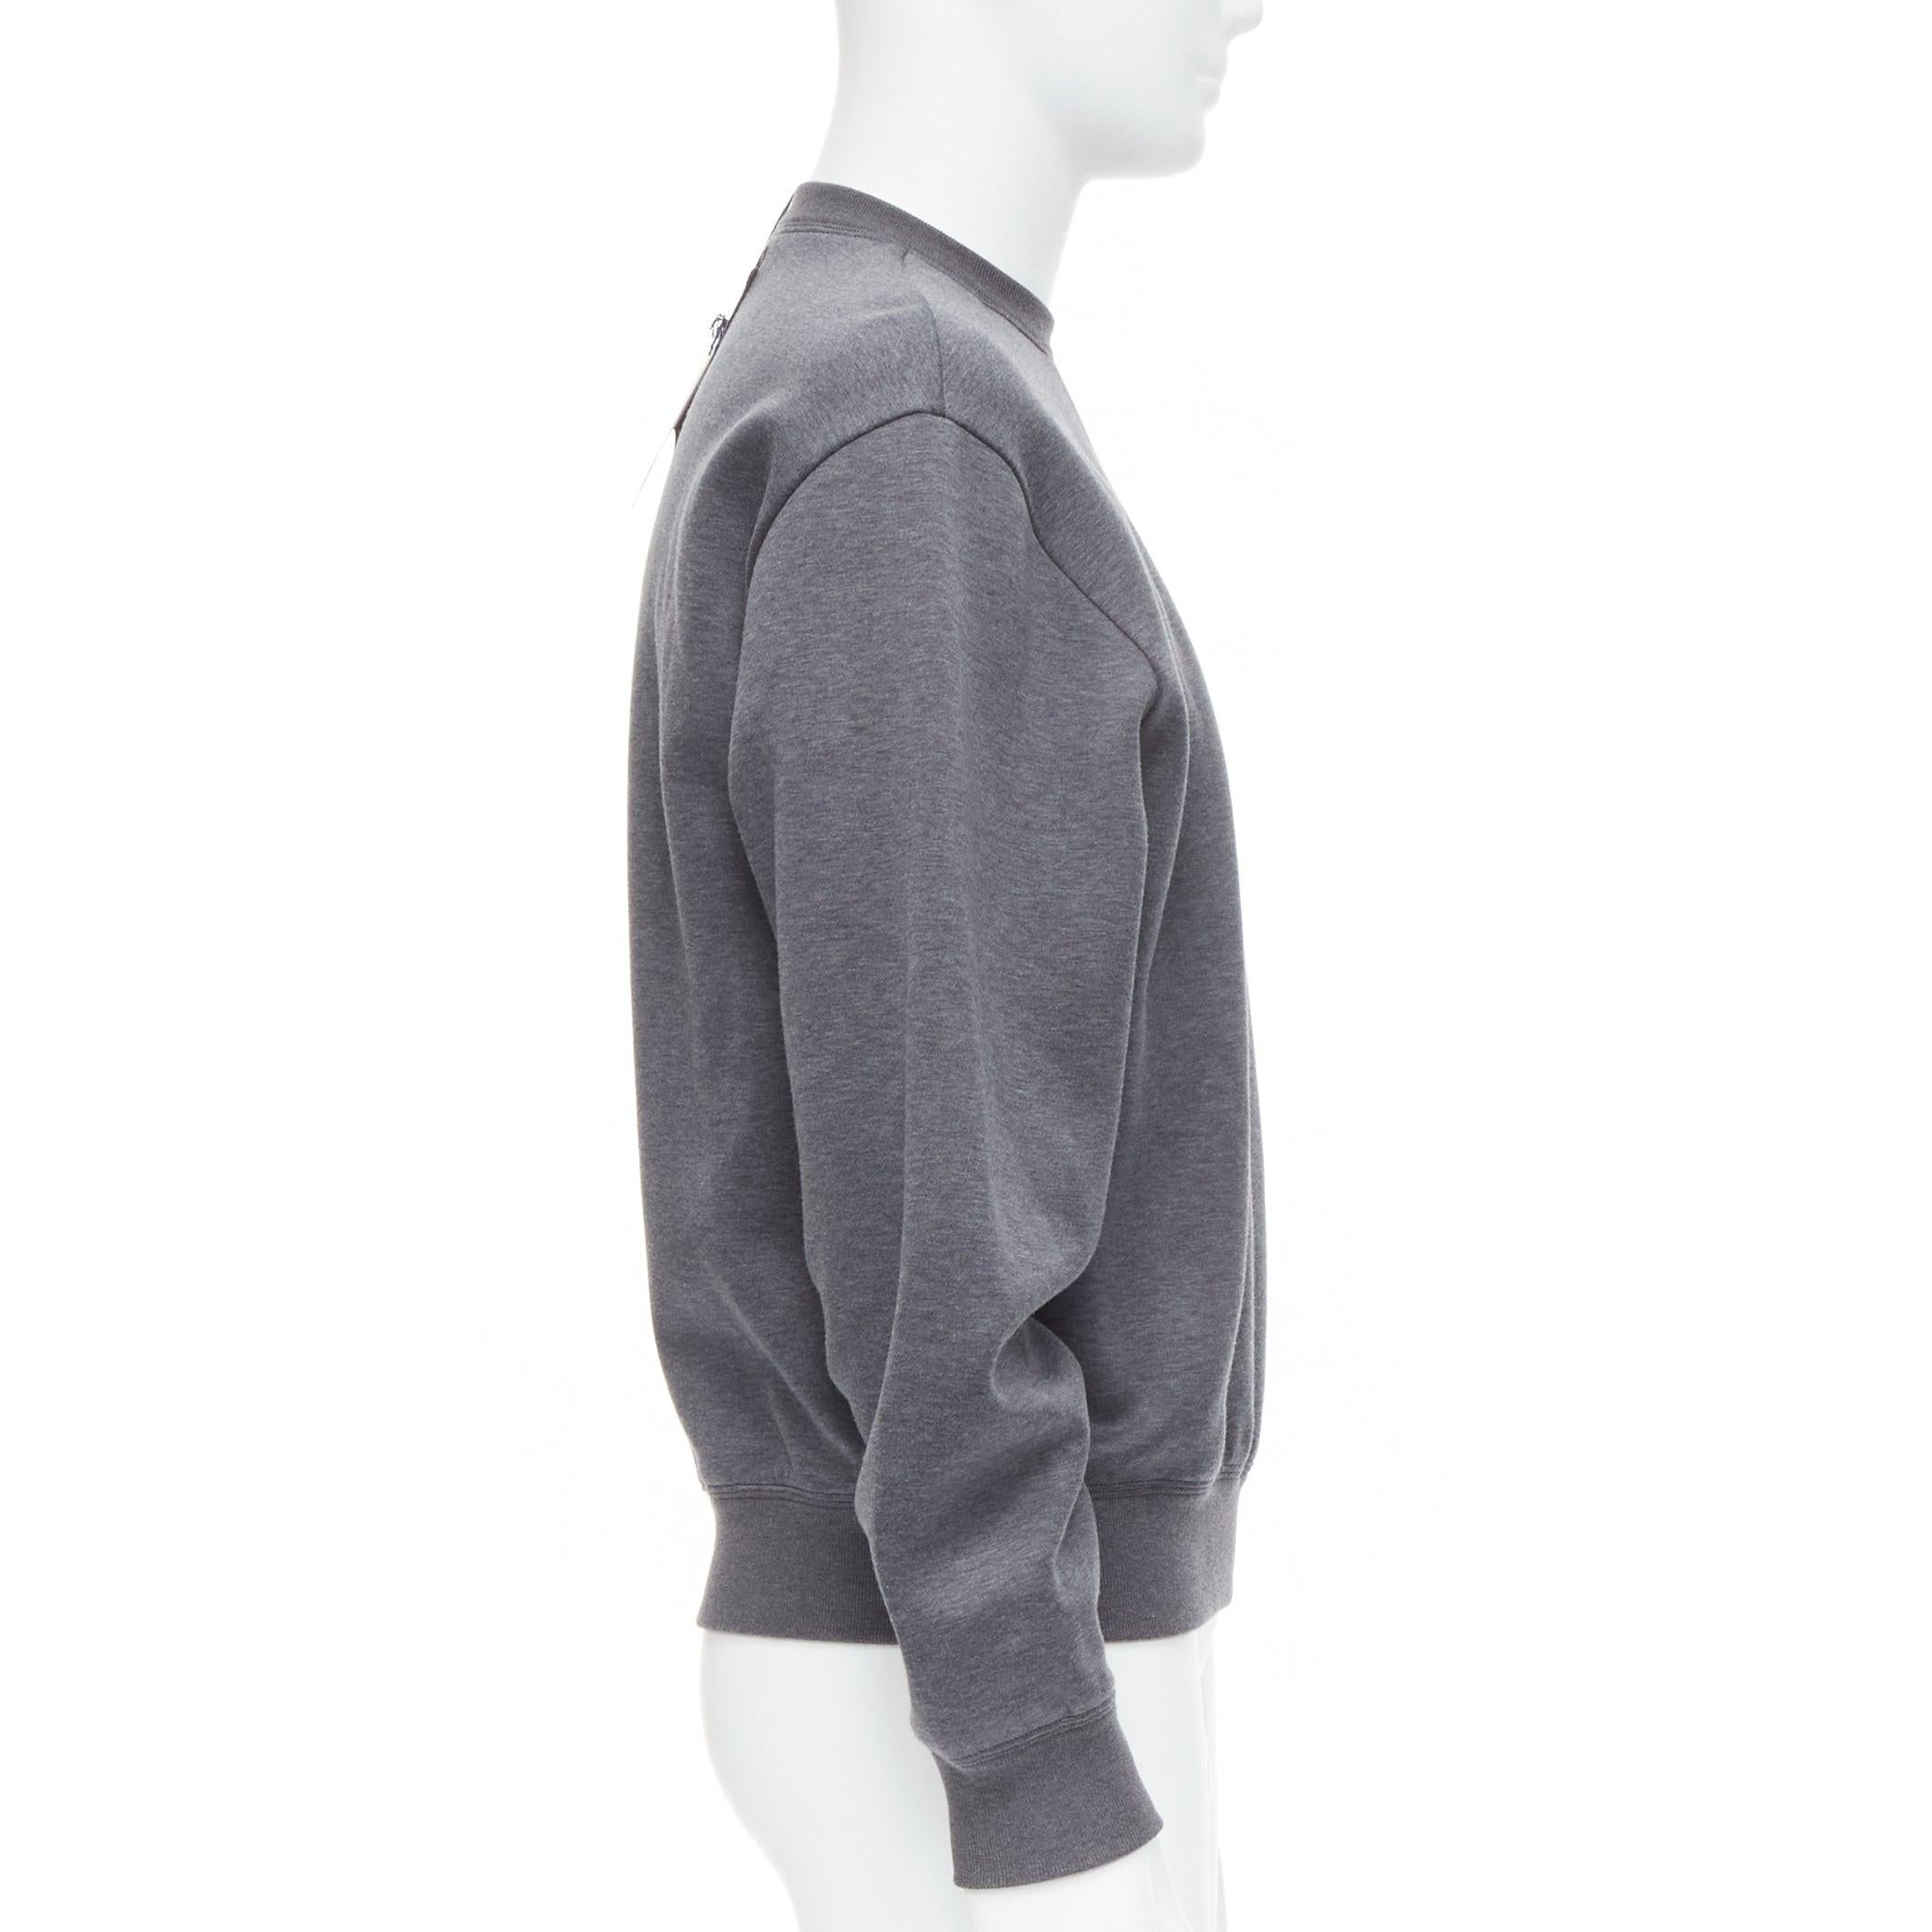 Men's new PRADA 2021 grey cotton triangle boxy structured pullover sweater EU46 S